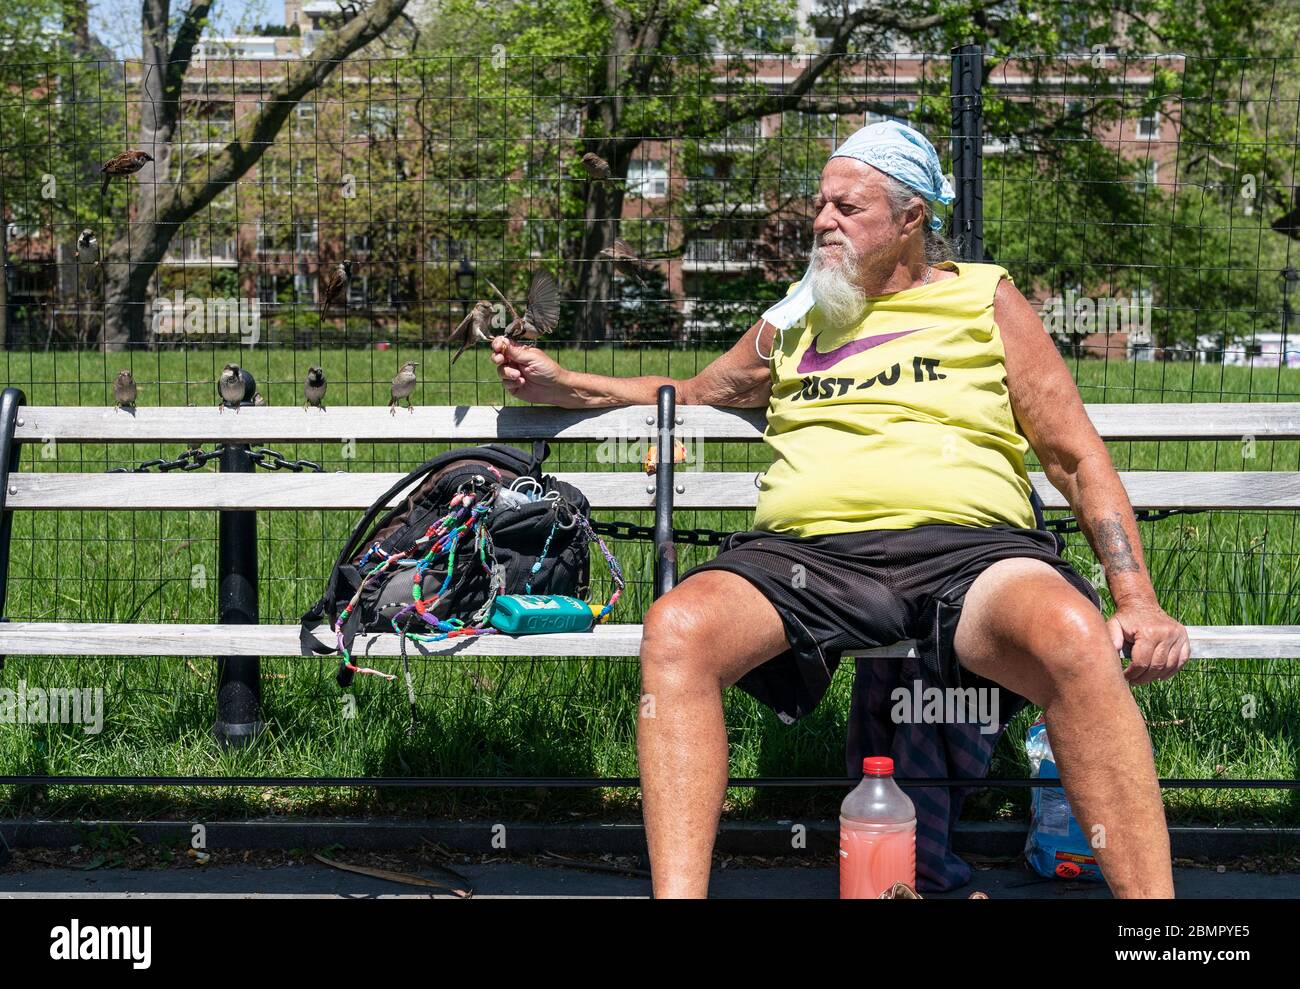 New York, NY - May 10, 2020: A man named Ronnie feed sparrows and enjoys sunny day amid COVID-19 pandemic in Washington Square Park Stock Photo